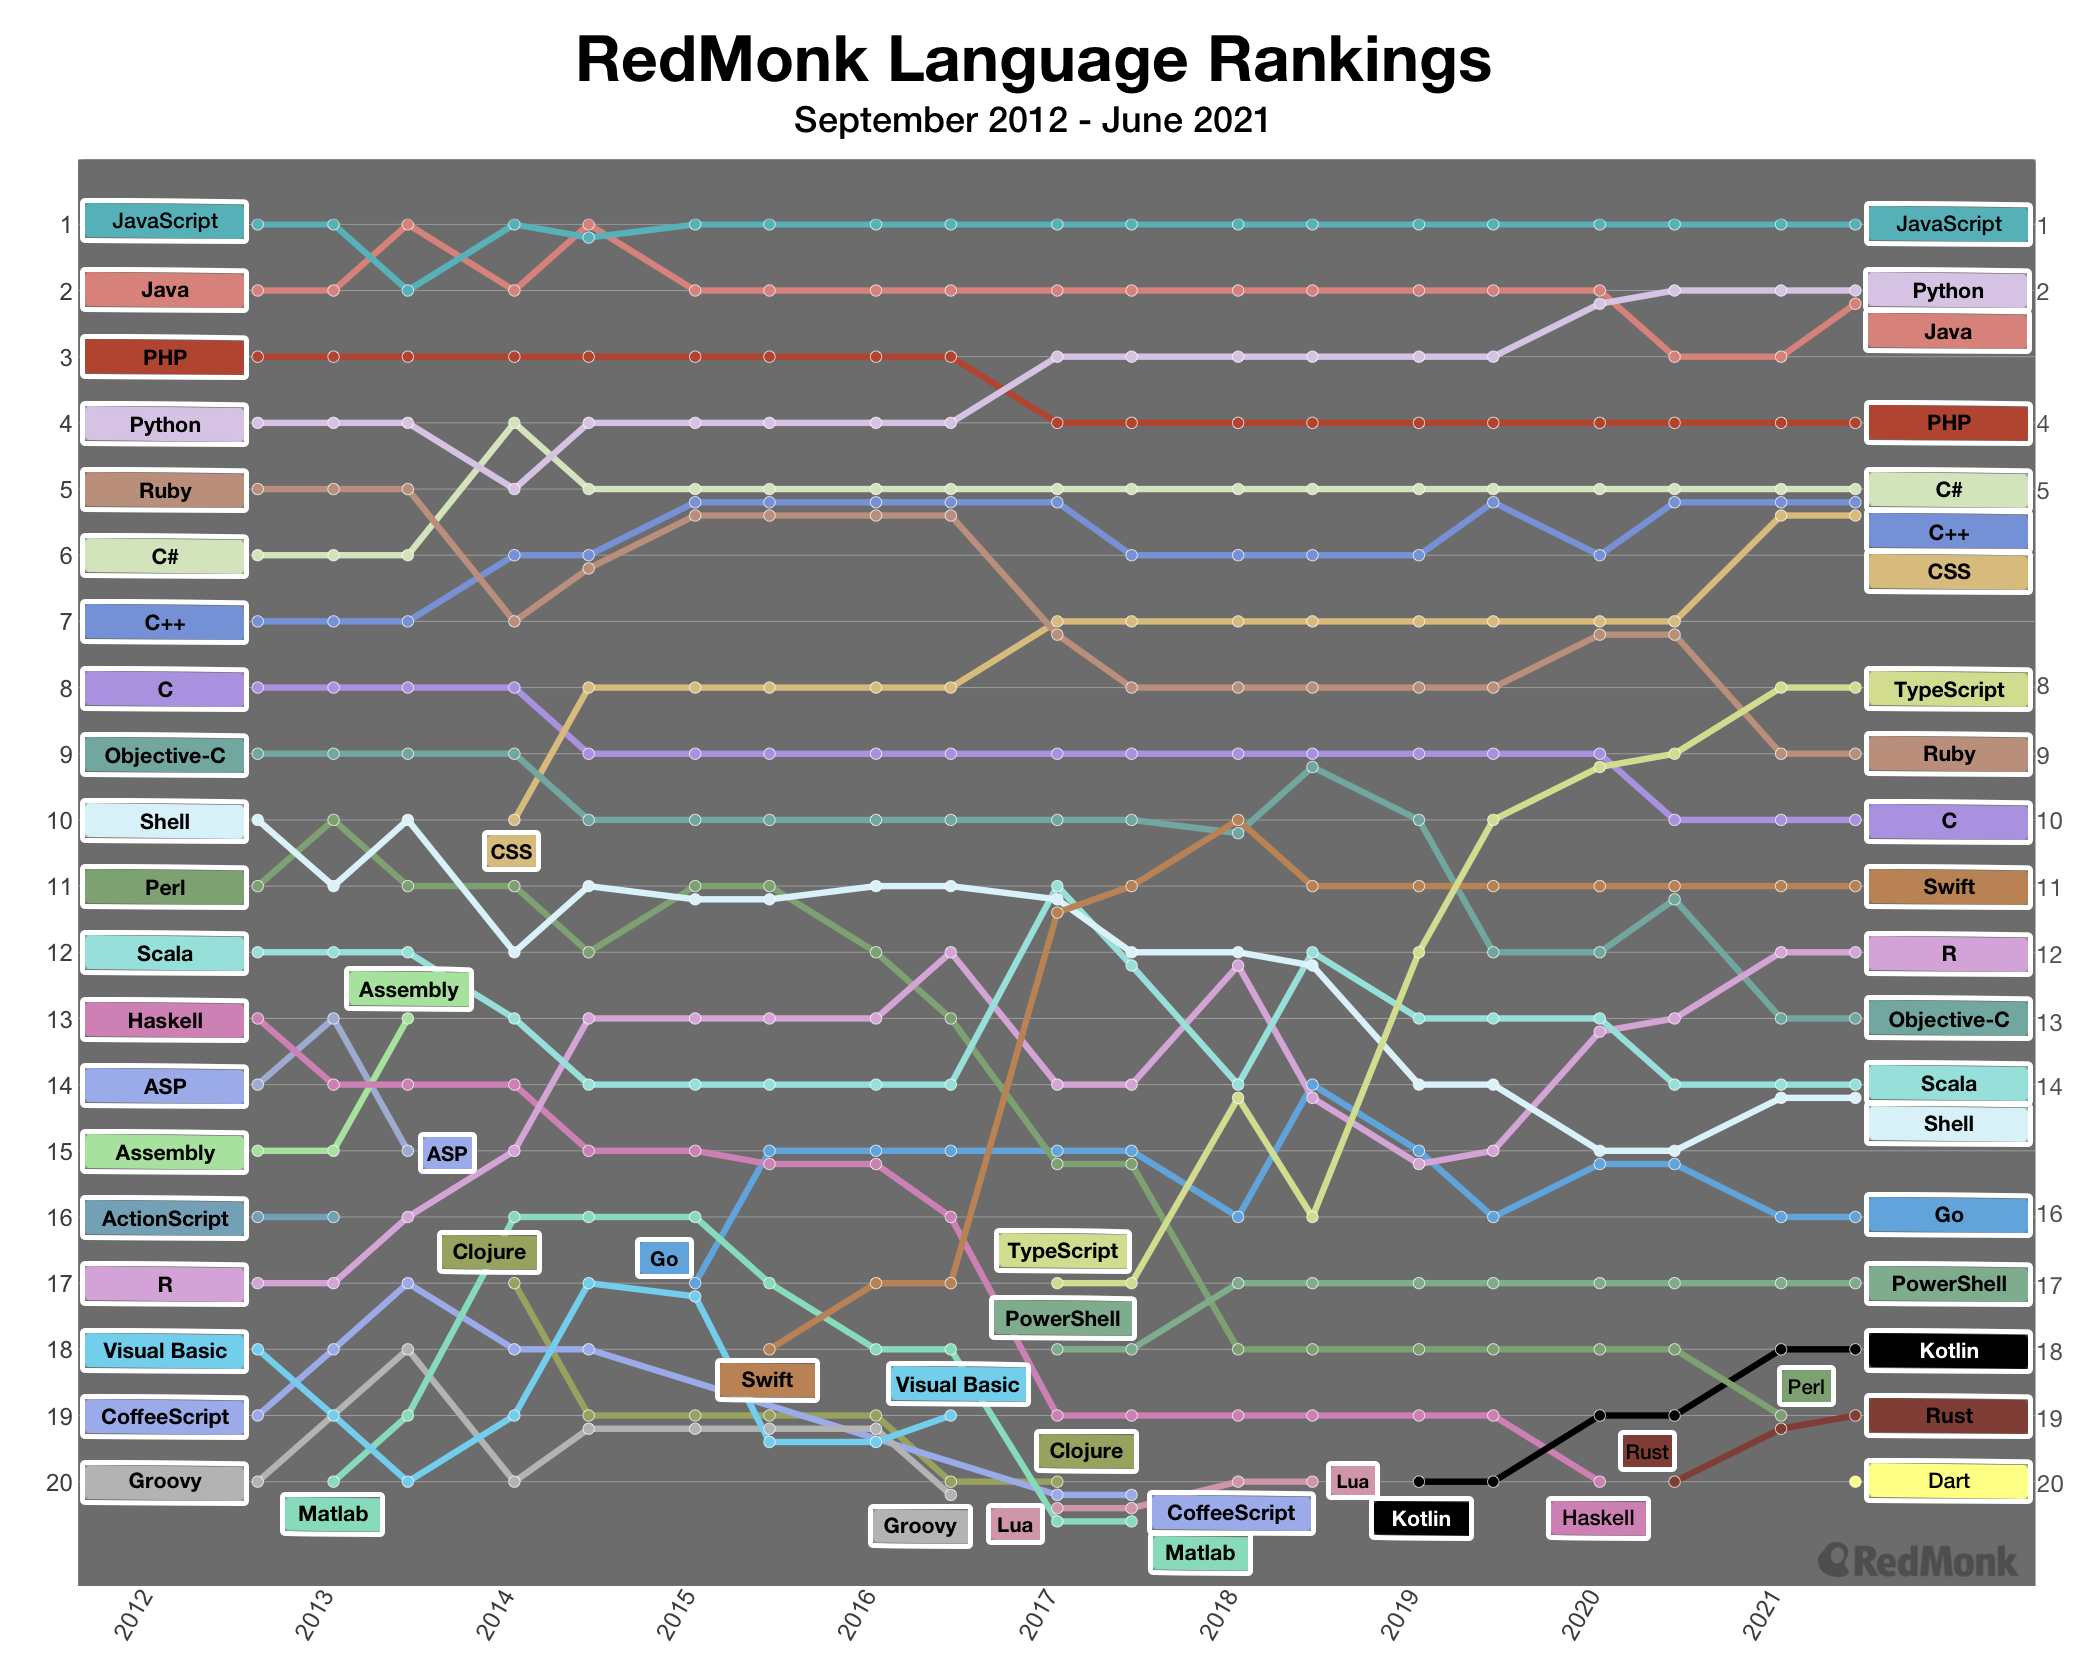 Redmonk language rankings show Kotlin at 18th